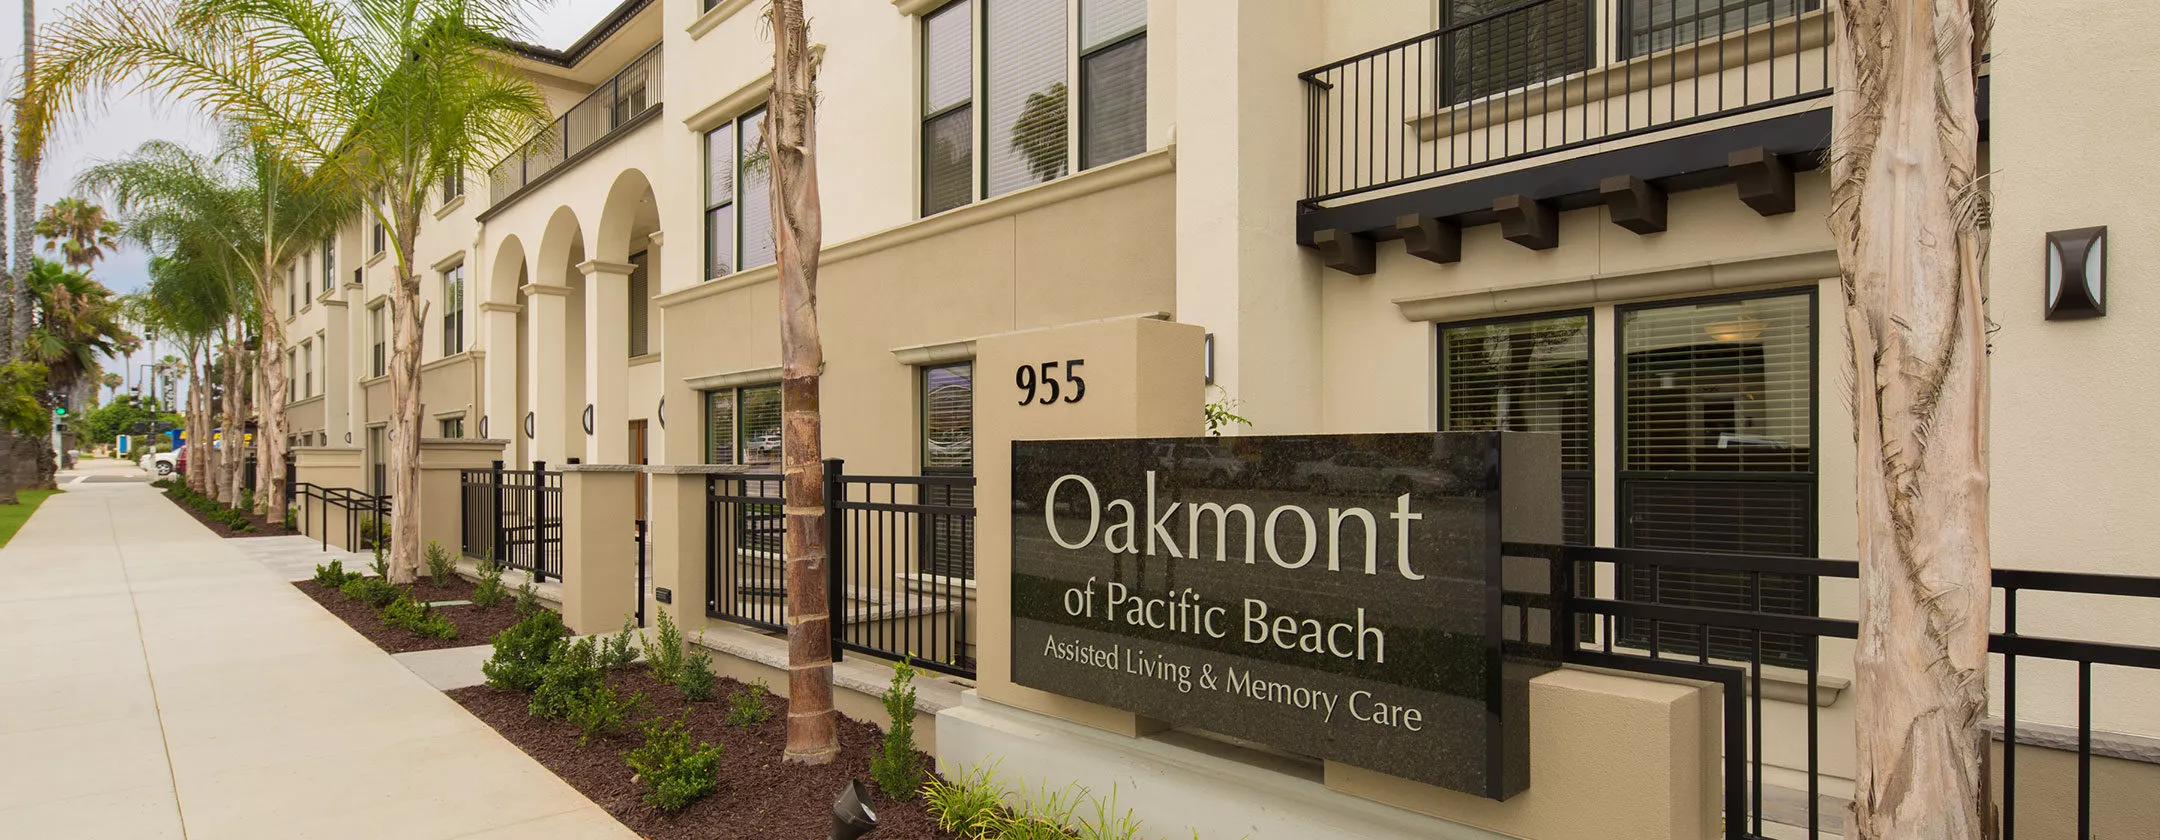 Oakmont of Pacific Beach exterior